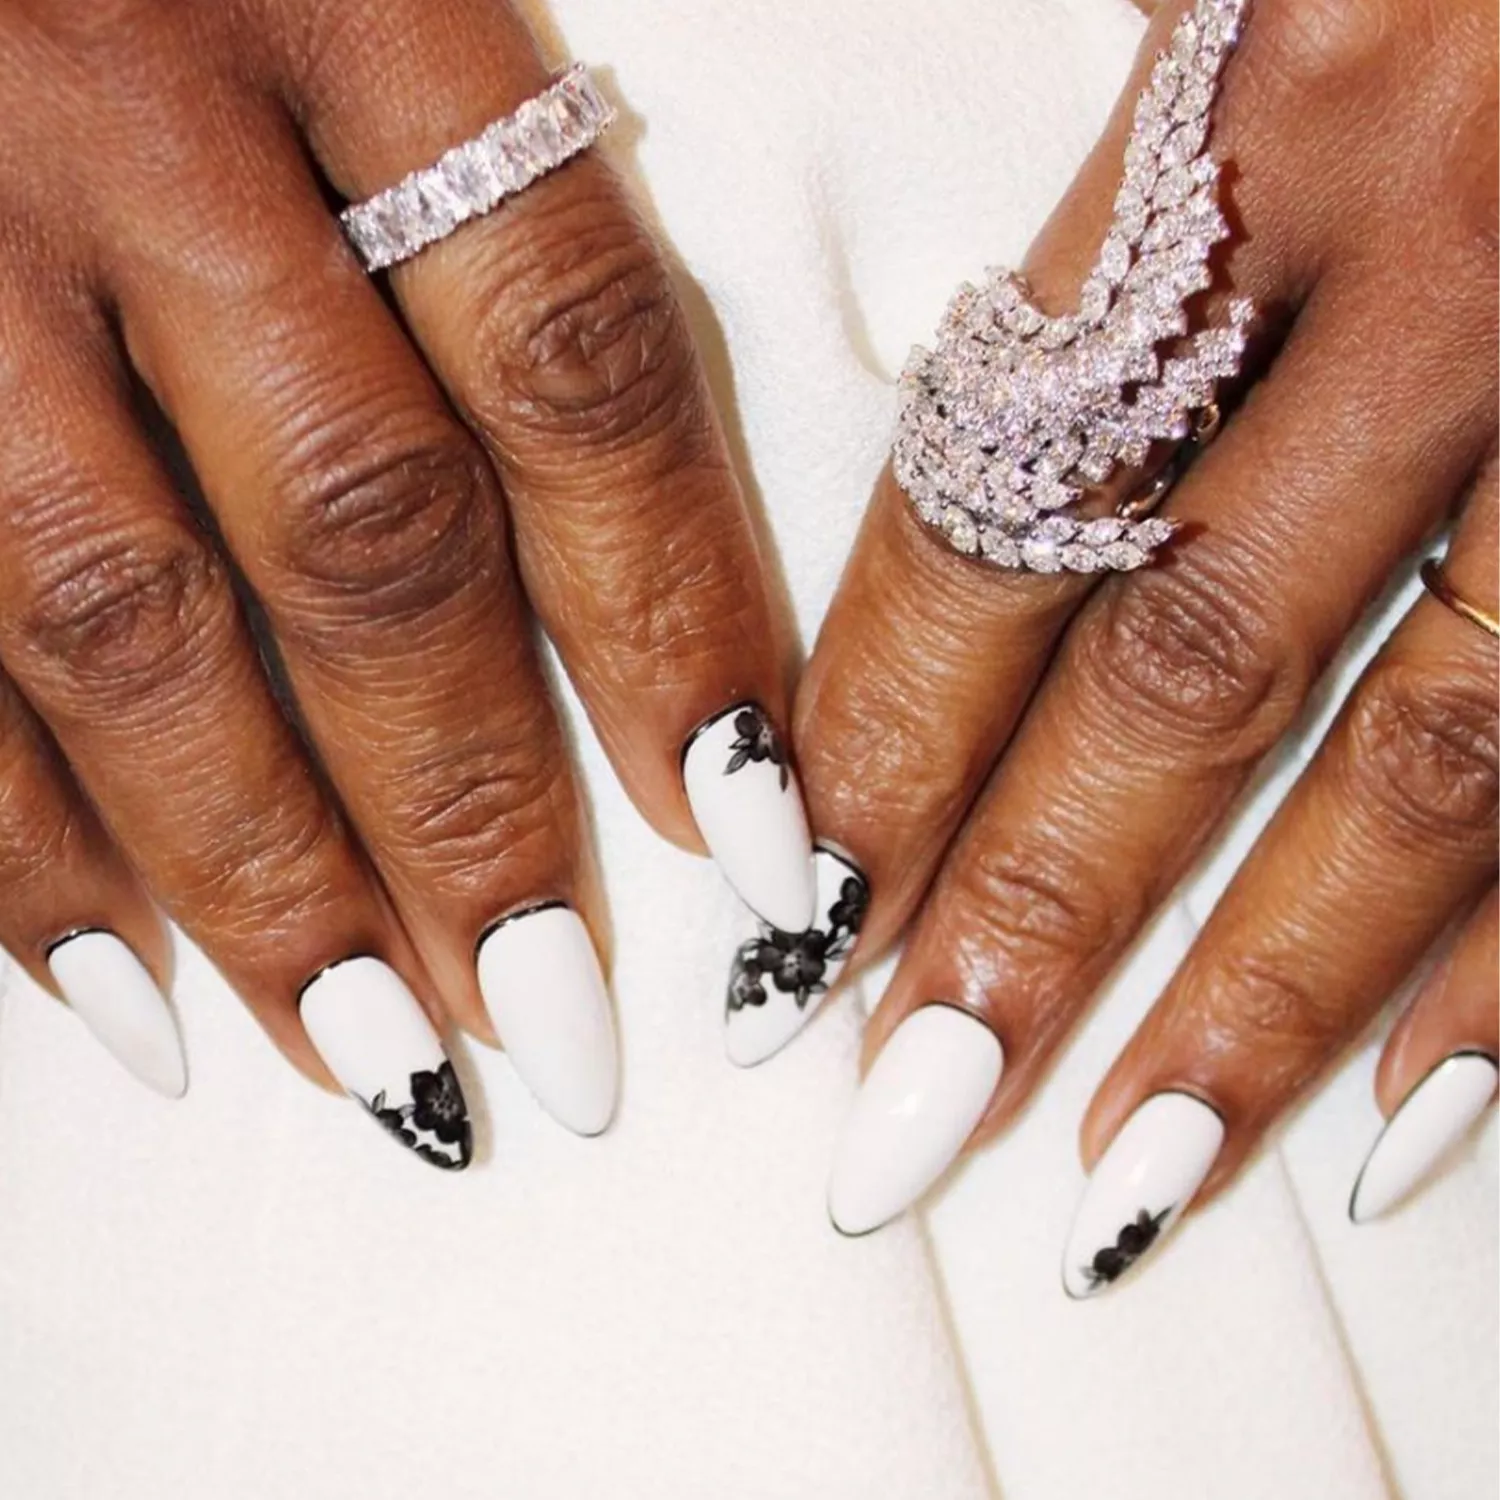 Kerry Washington almond-shaped nails 